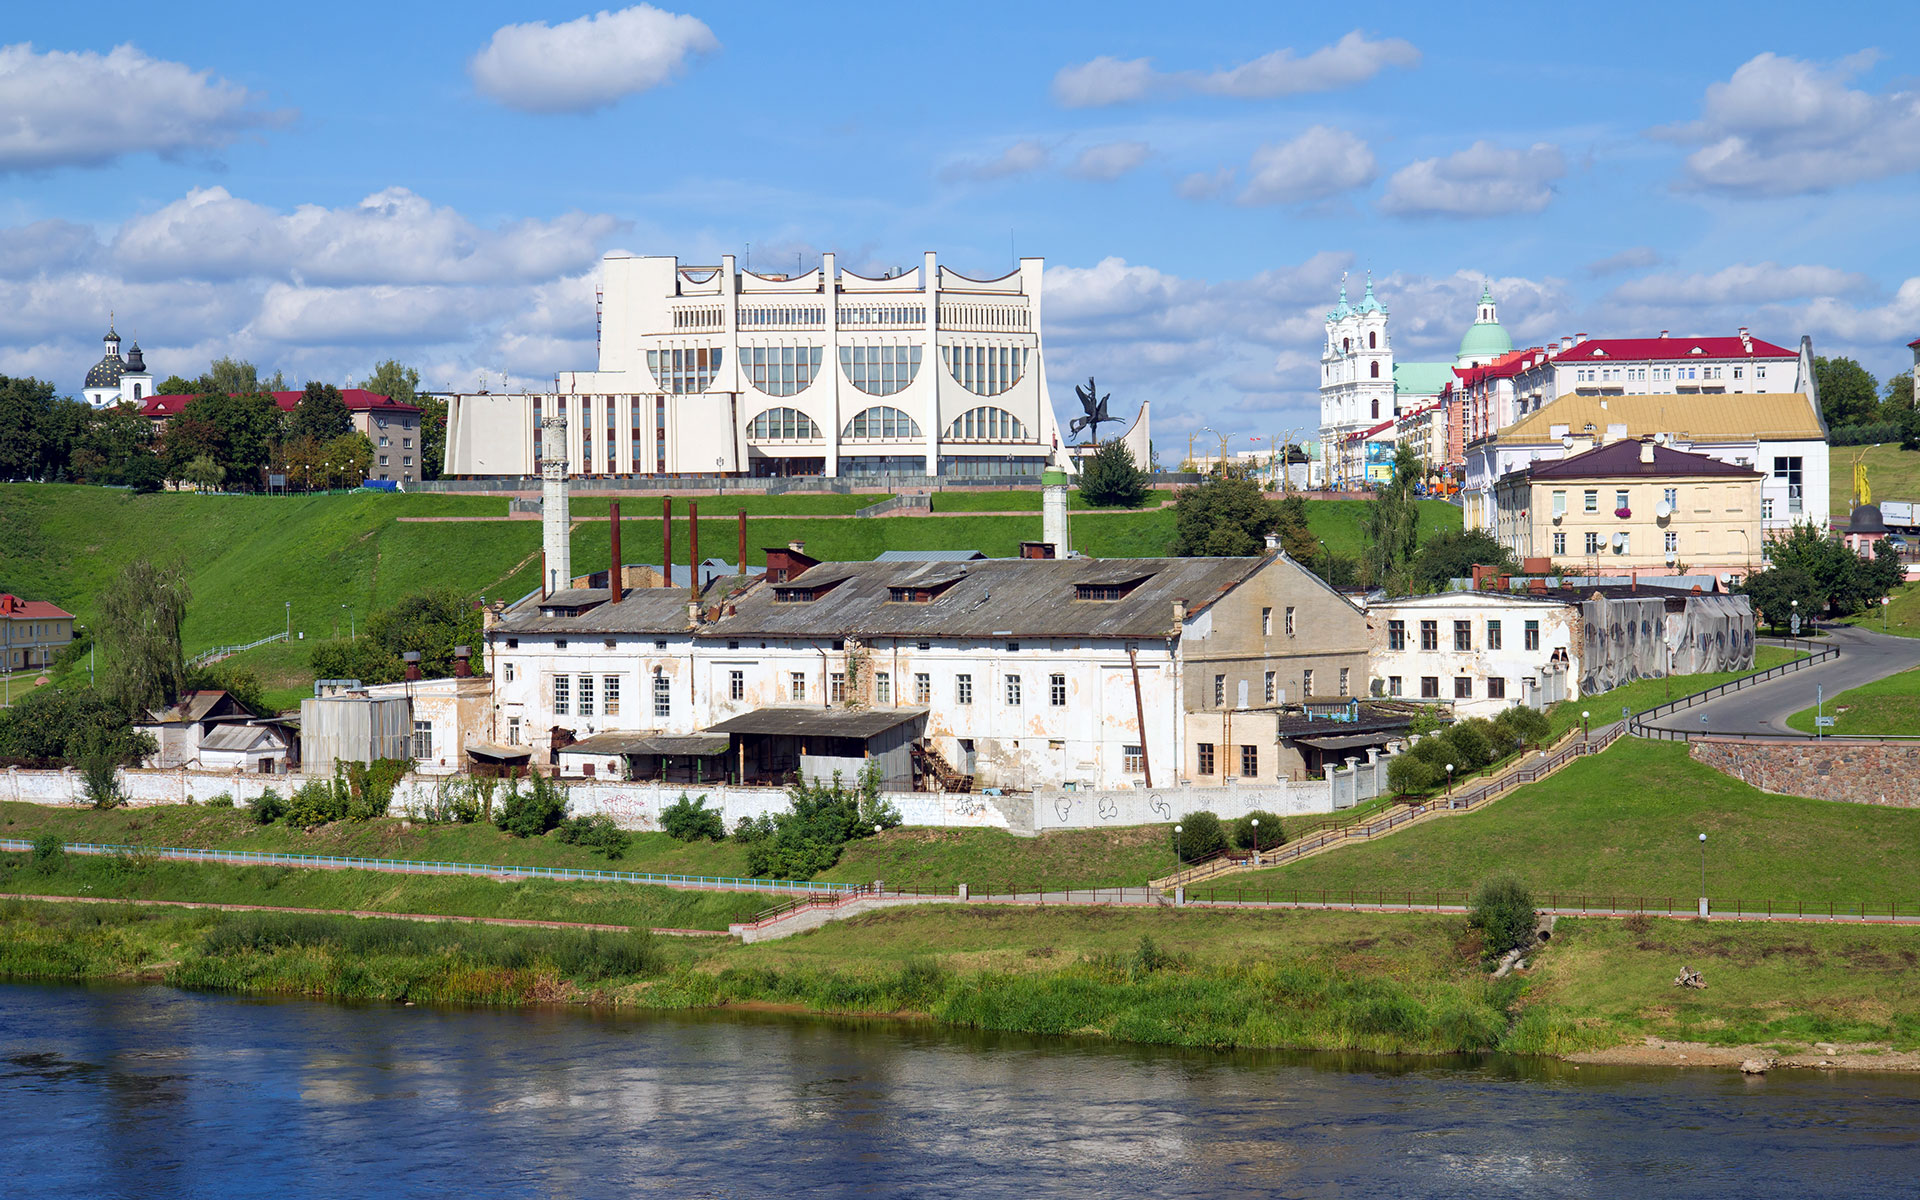 River Neman and the Belarusian town of Hrodna (photo © Eillen1981 / dreamstime.com).